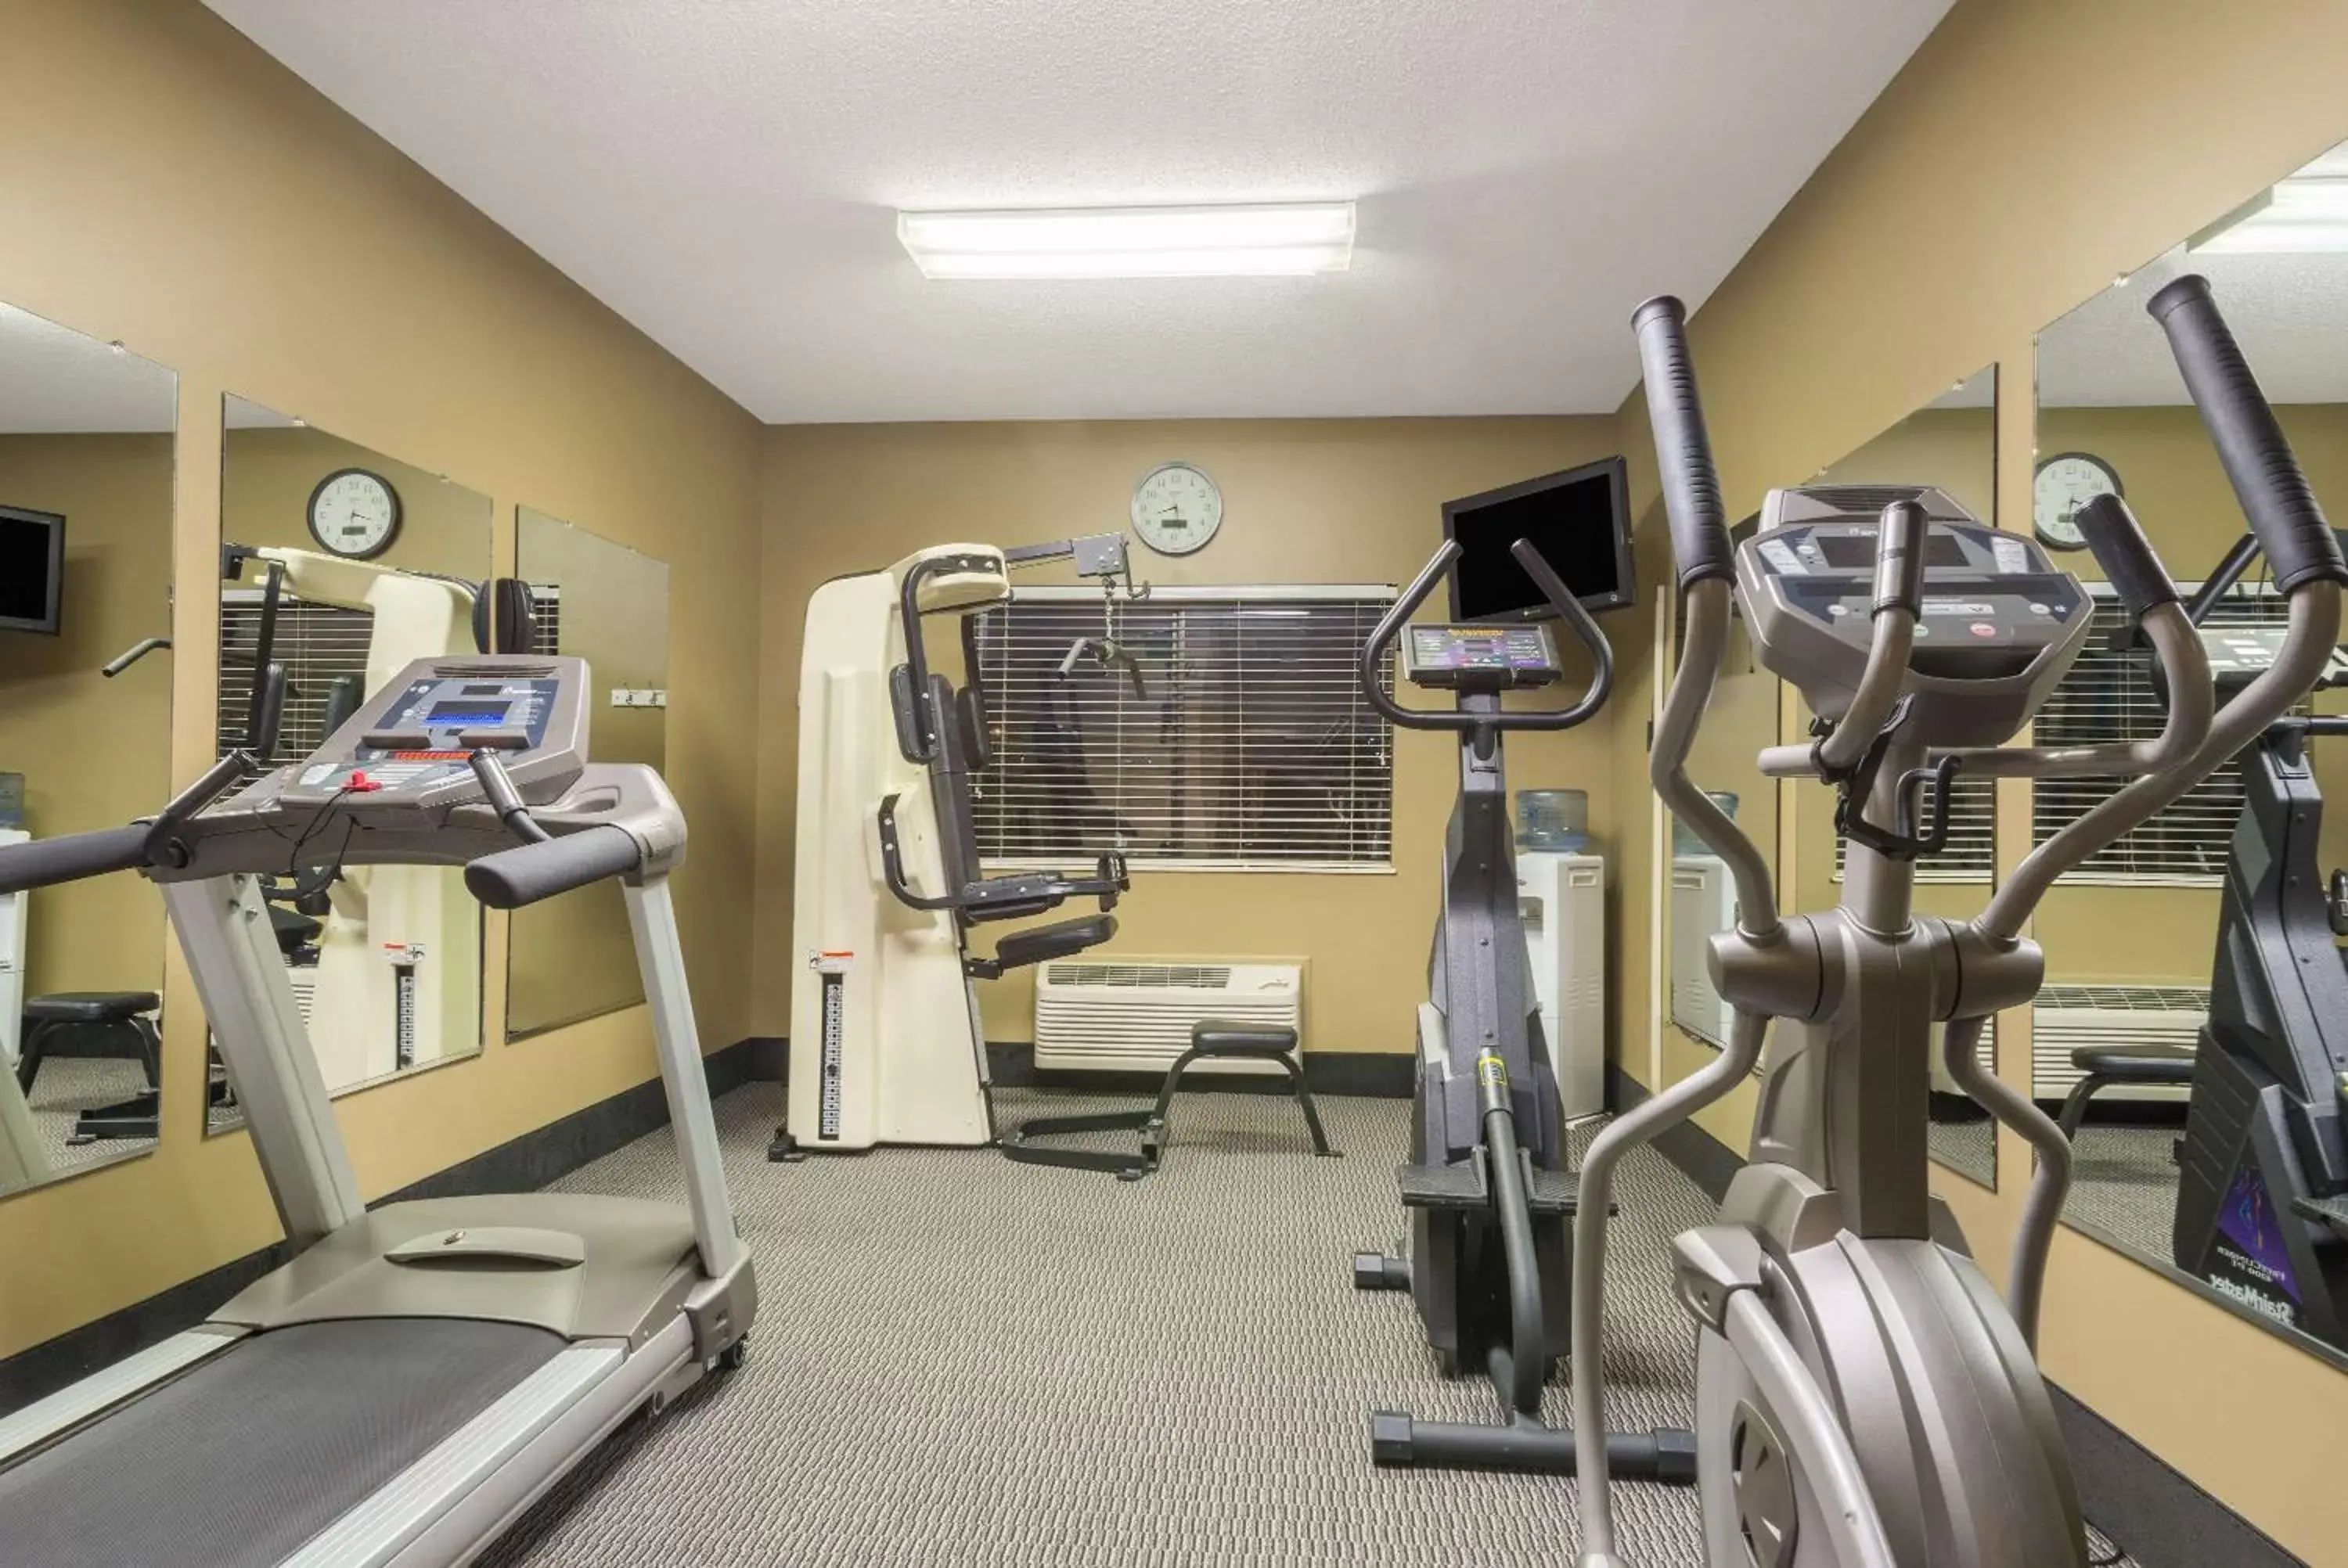 Fitness centre/facilities, Fitness Center/Facilities in Ramada Hotel Ashland-Catlettsburg